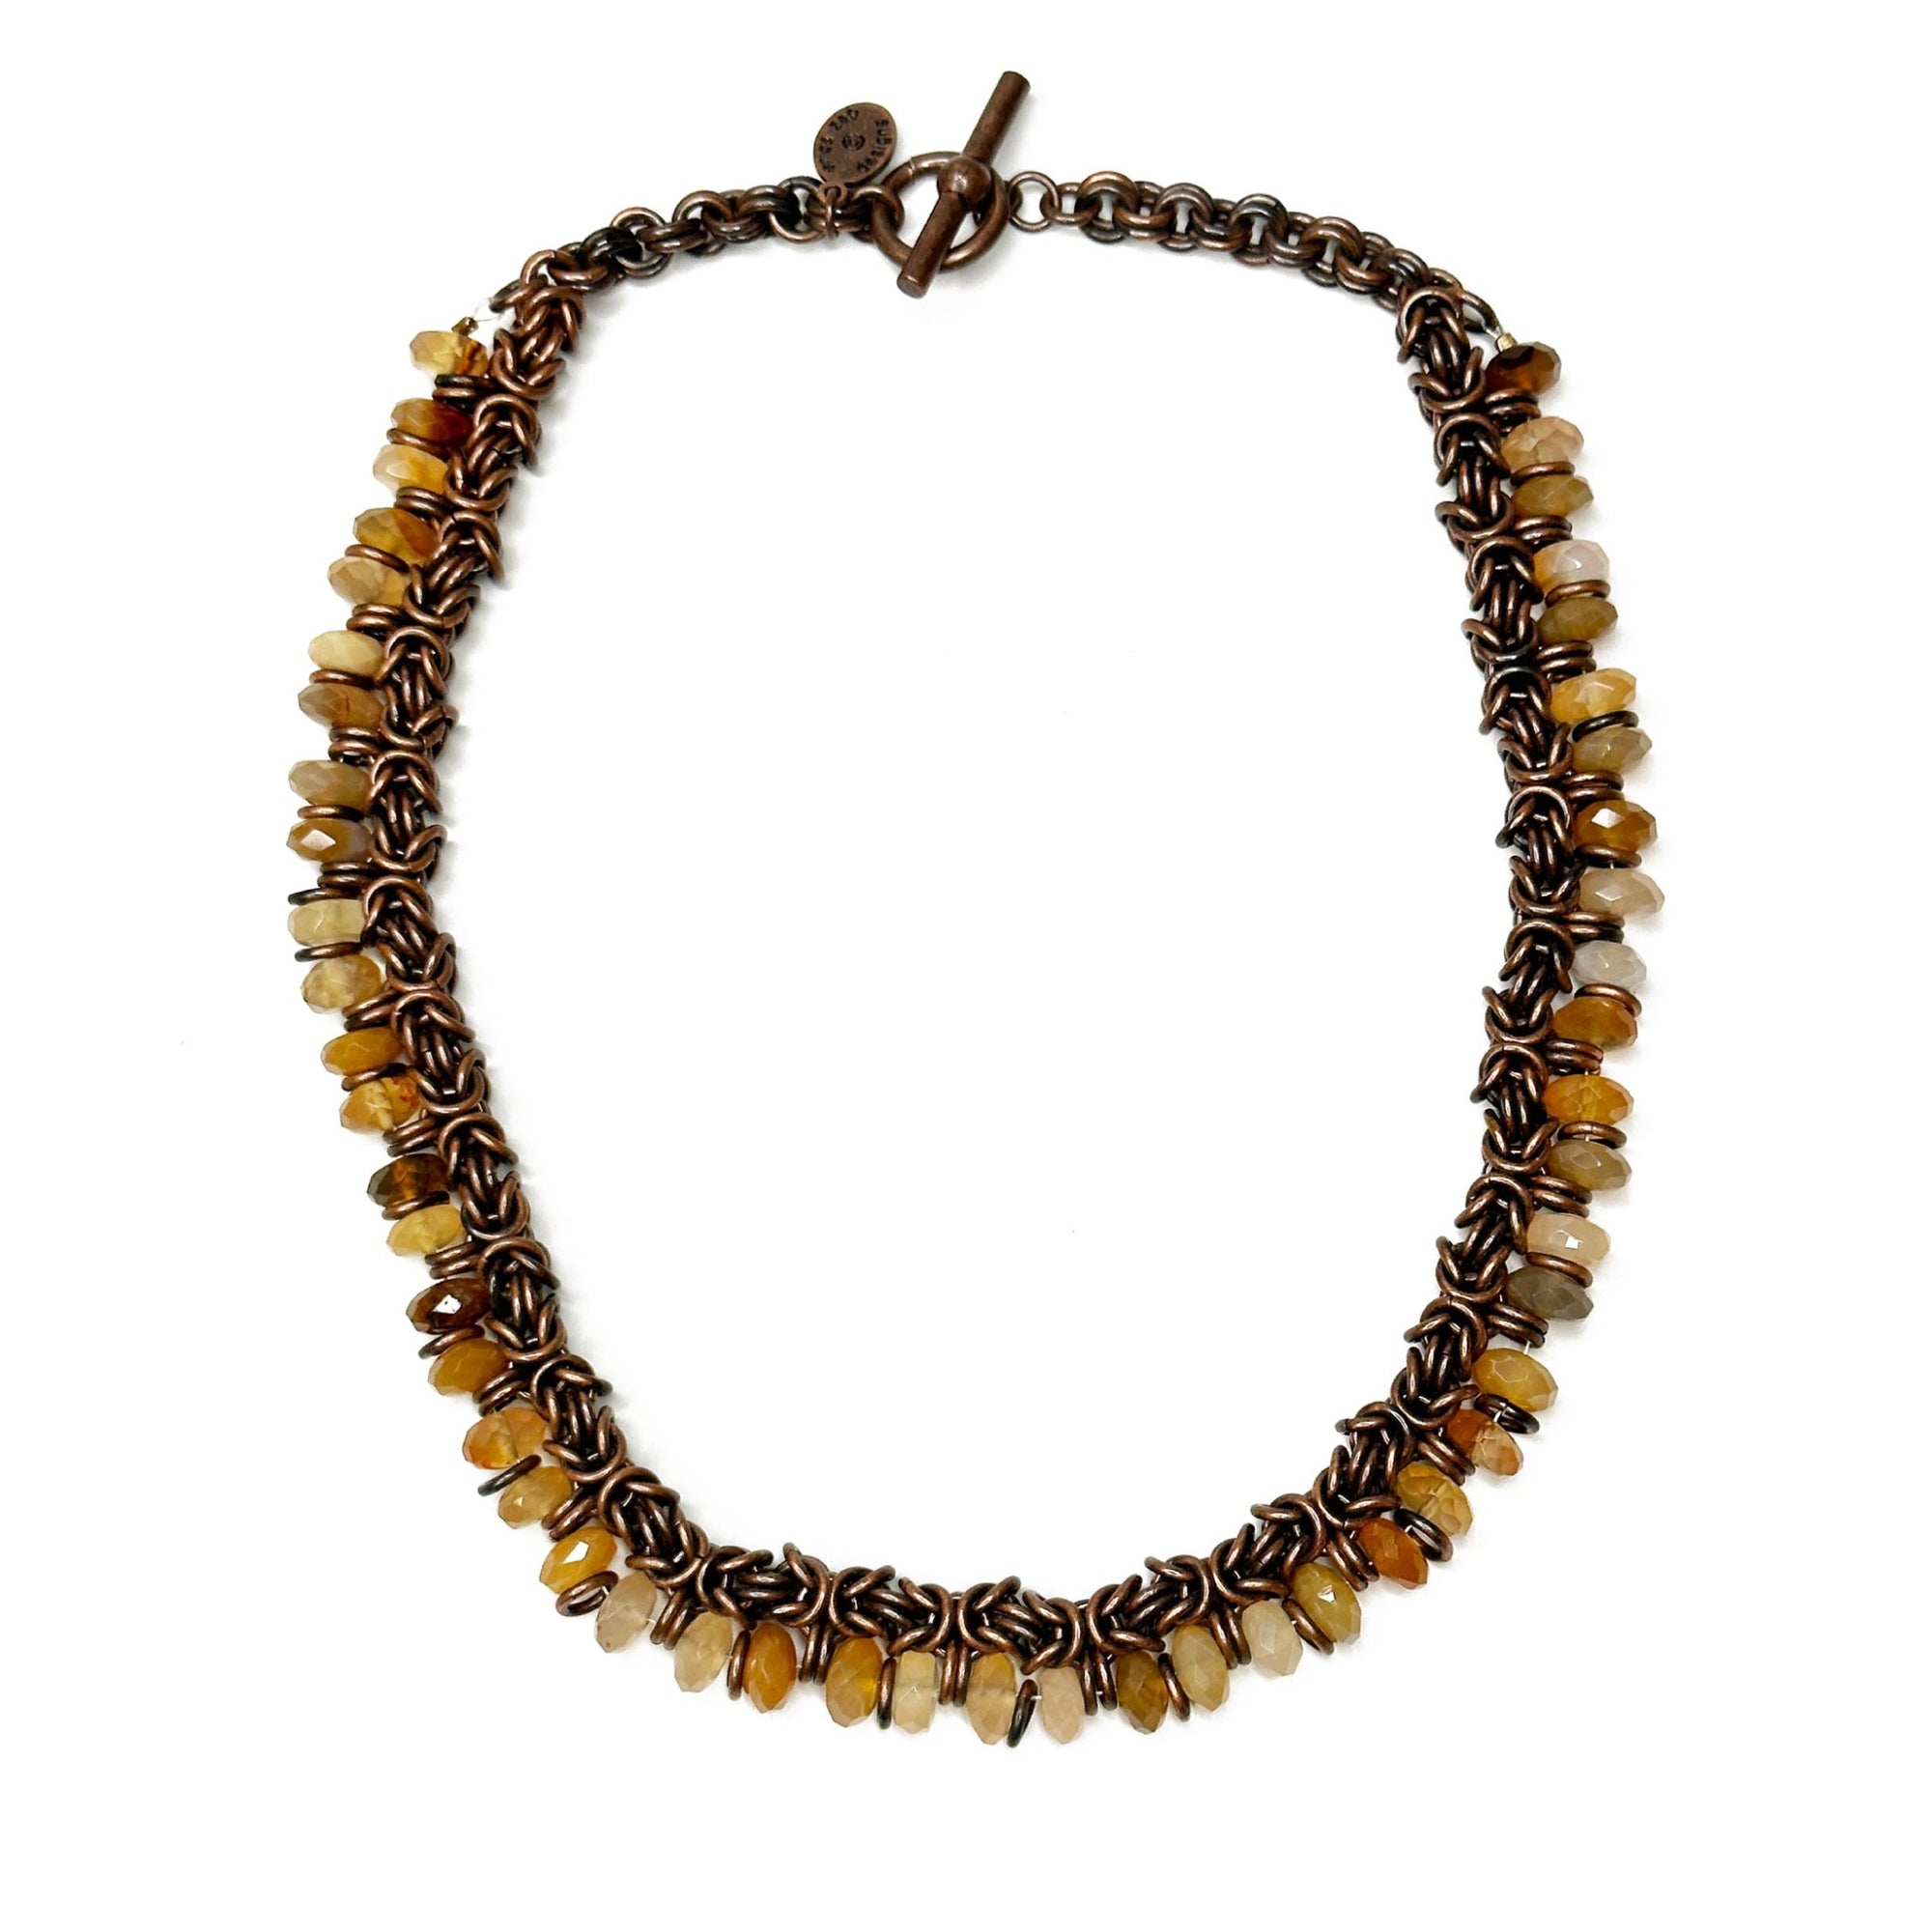 Antique Copper Byzantine Chain Necklace with Carnelian Rondelles | Erica Zap Designs